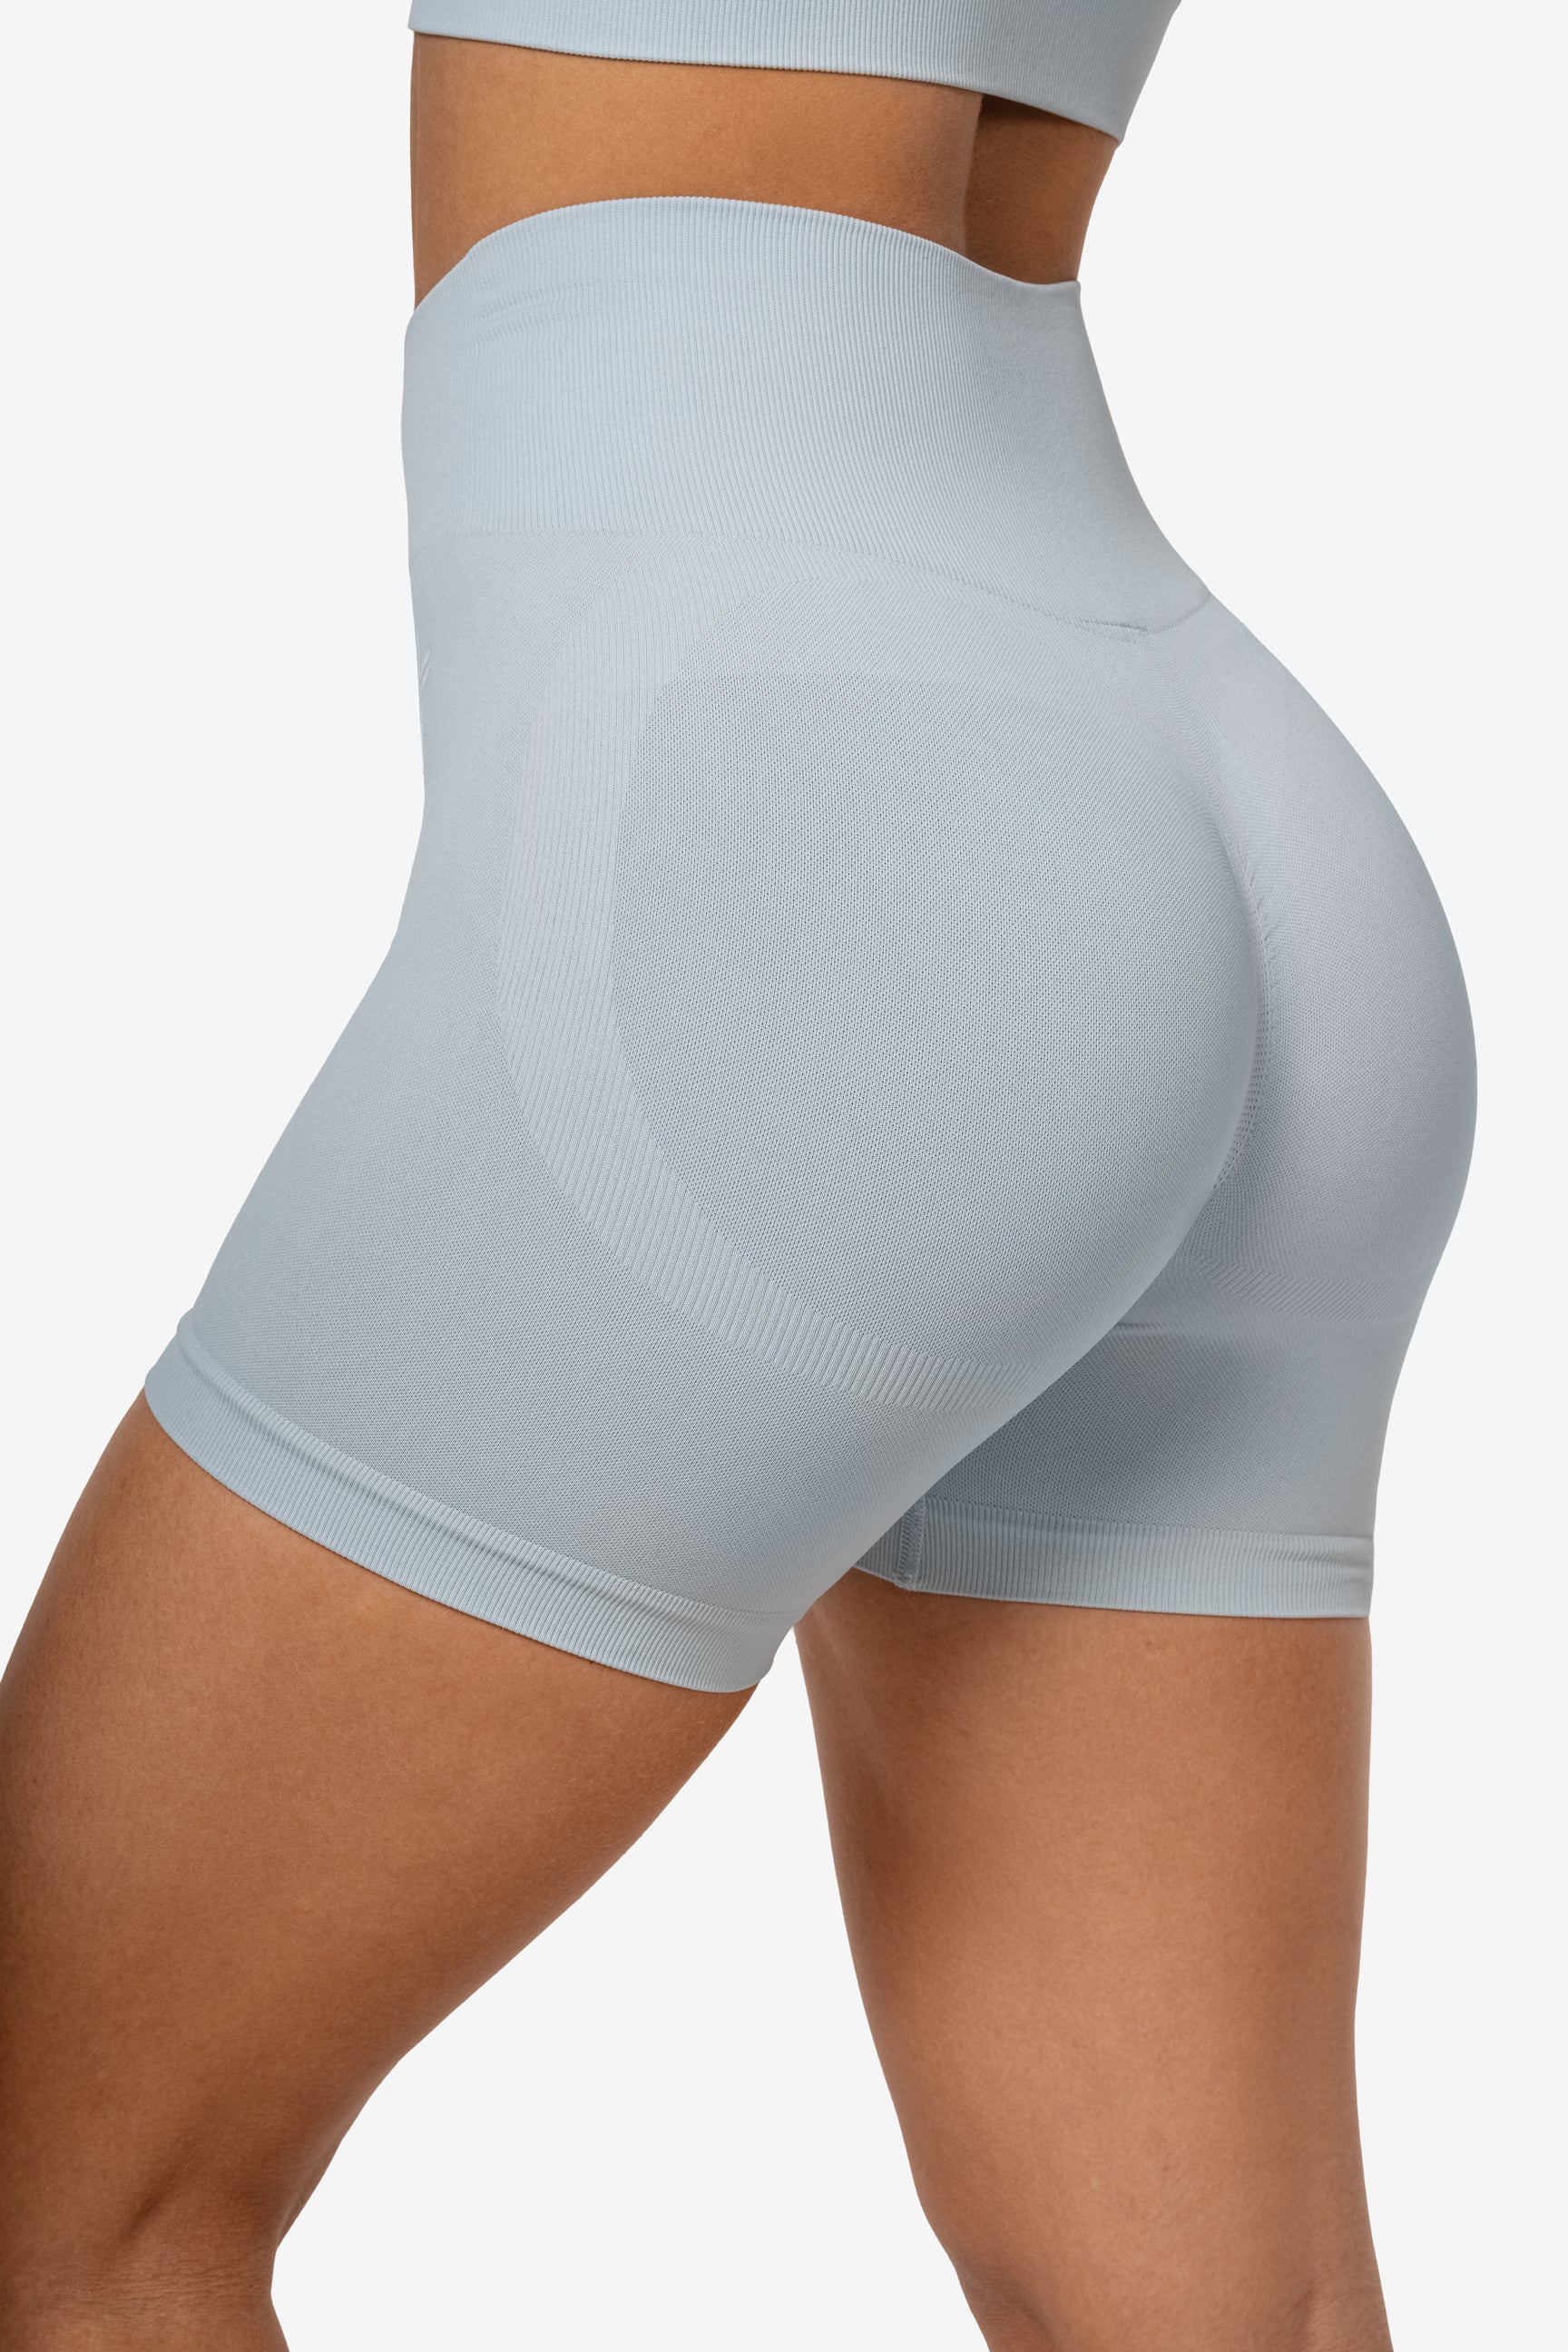 Light Grey Lunge Scrunch Shorts - for dame - Famme - Shorts